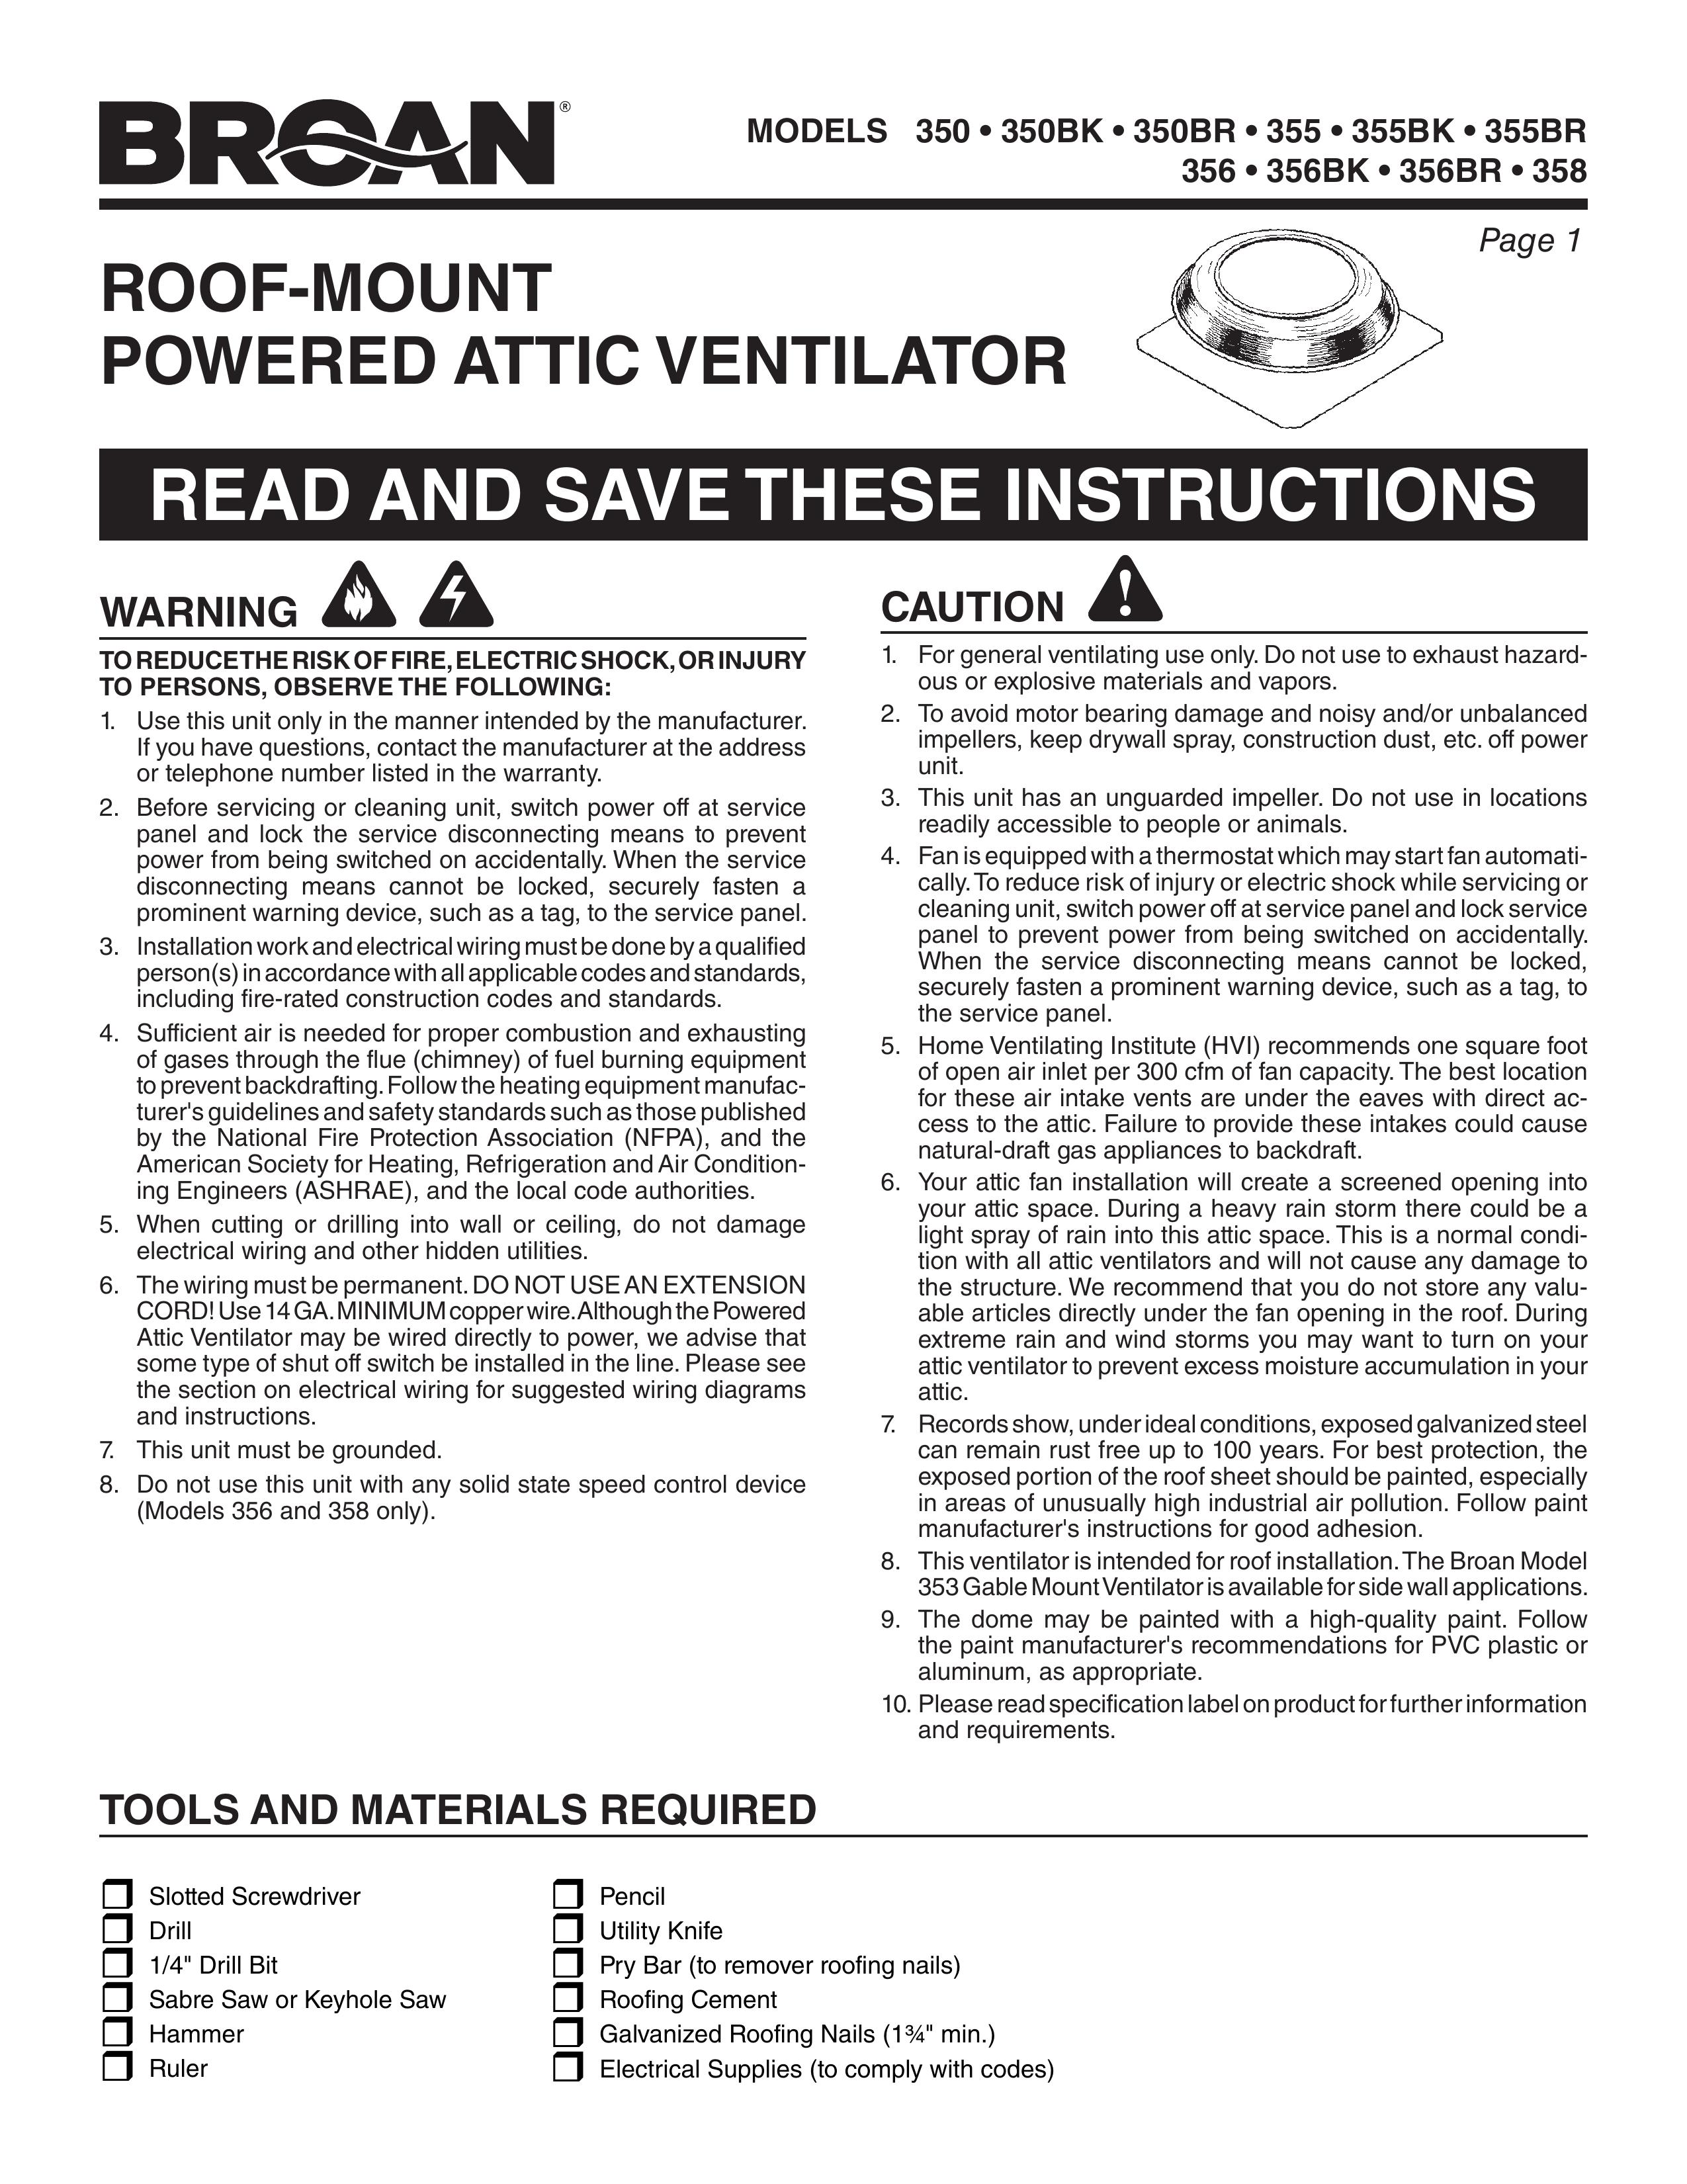 Broan 356BK Ventilation Hood User Manual